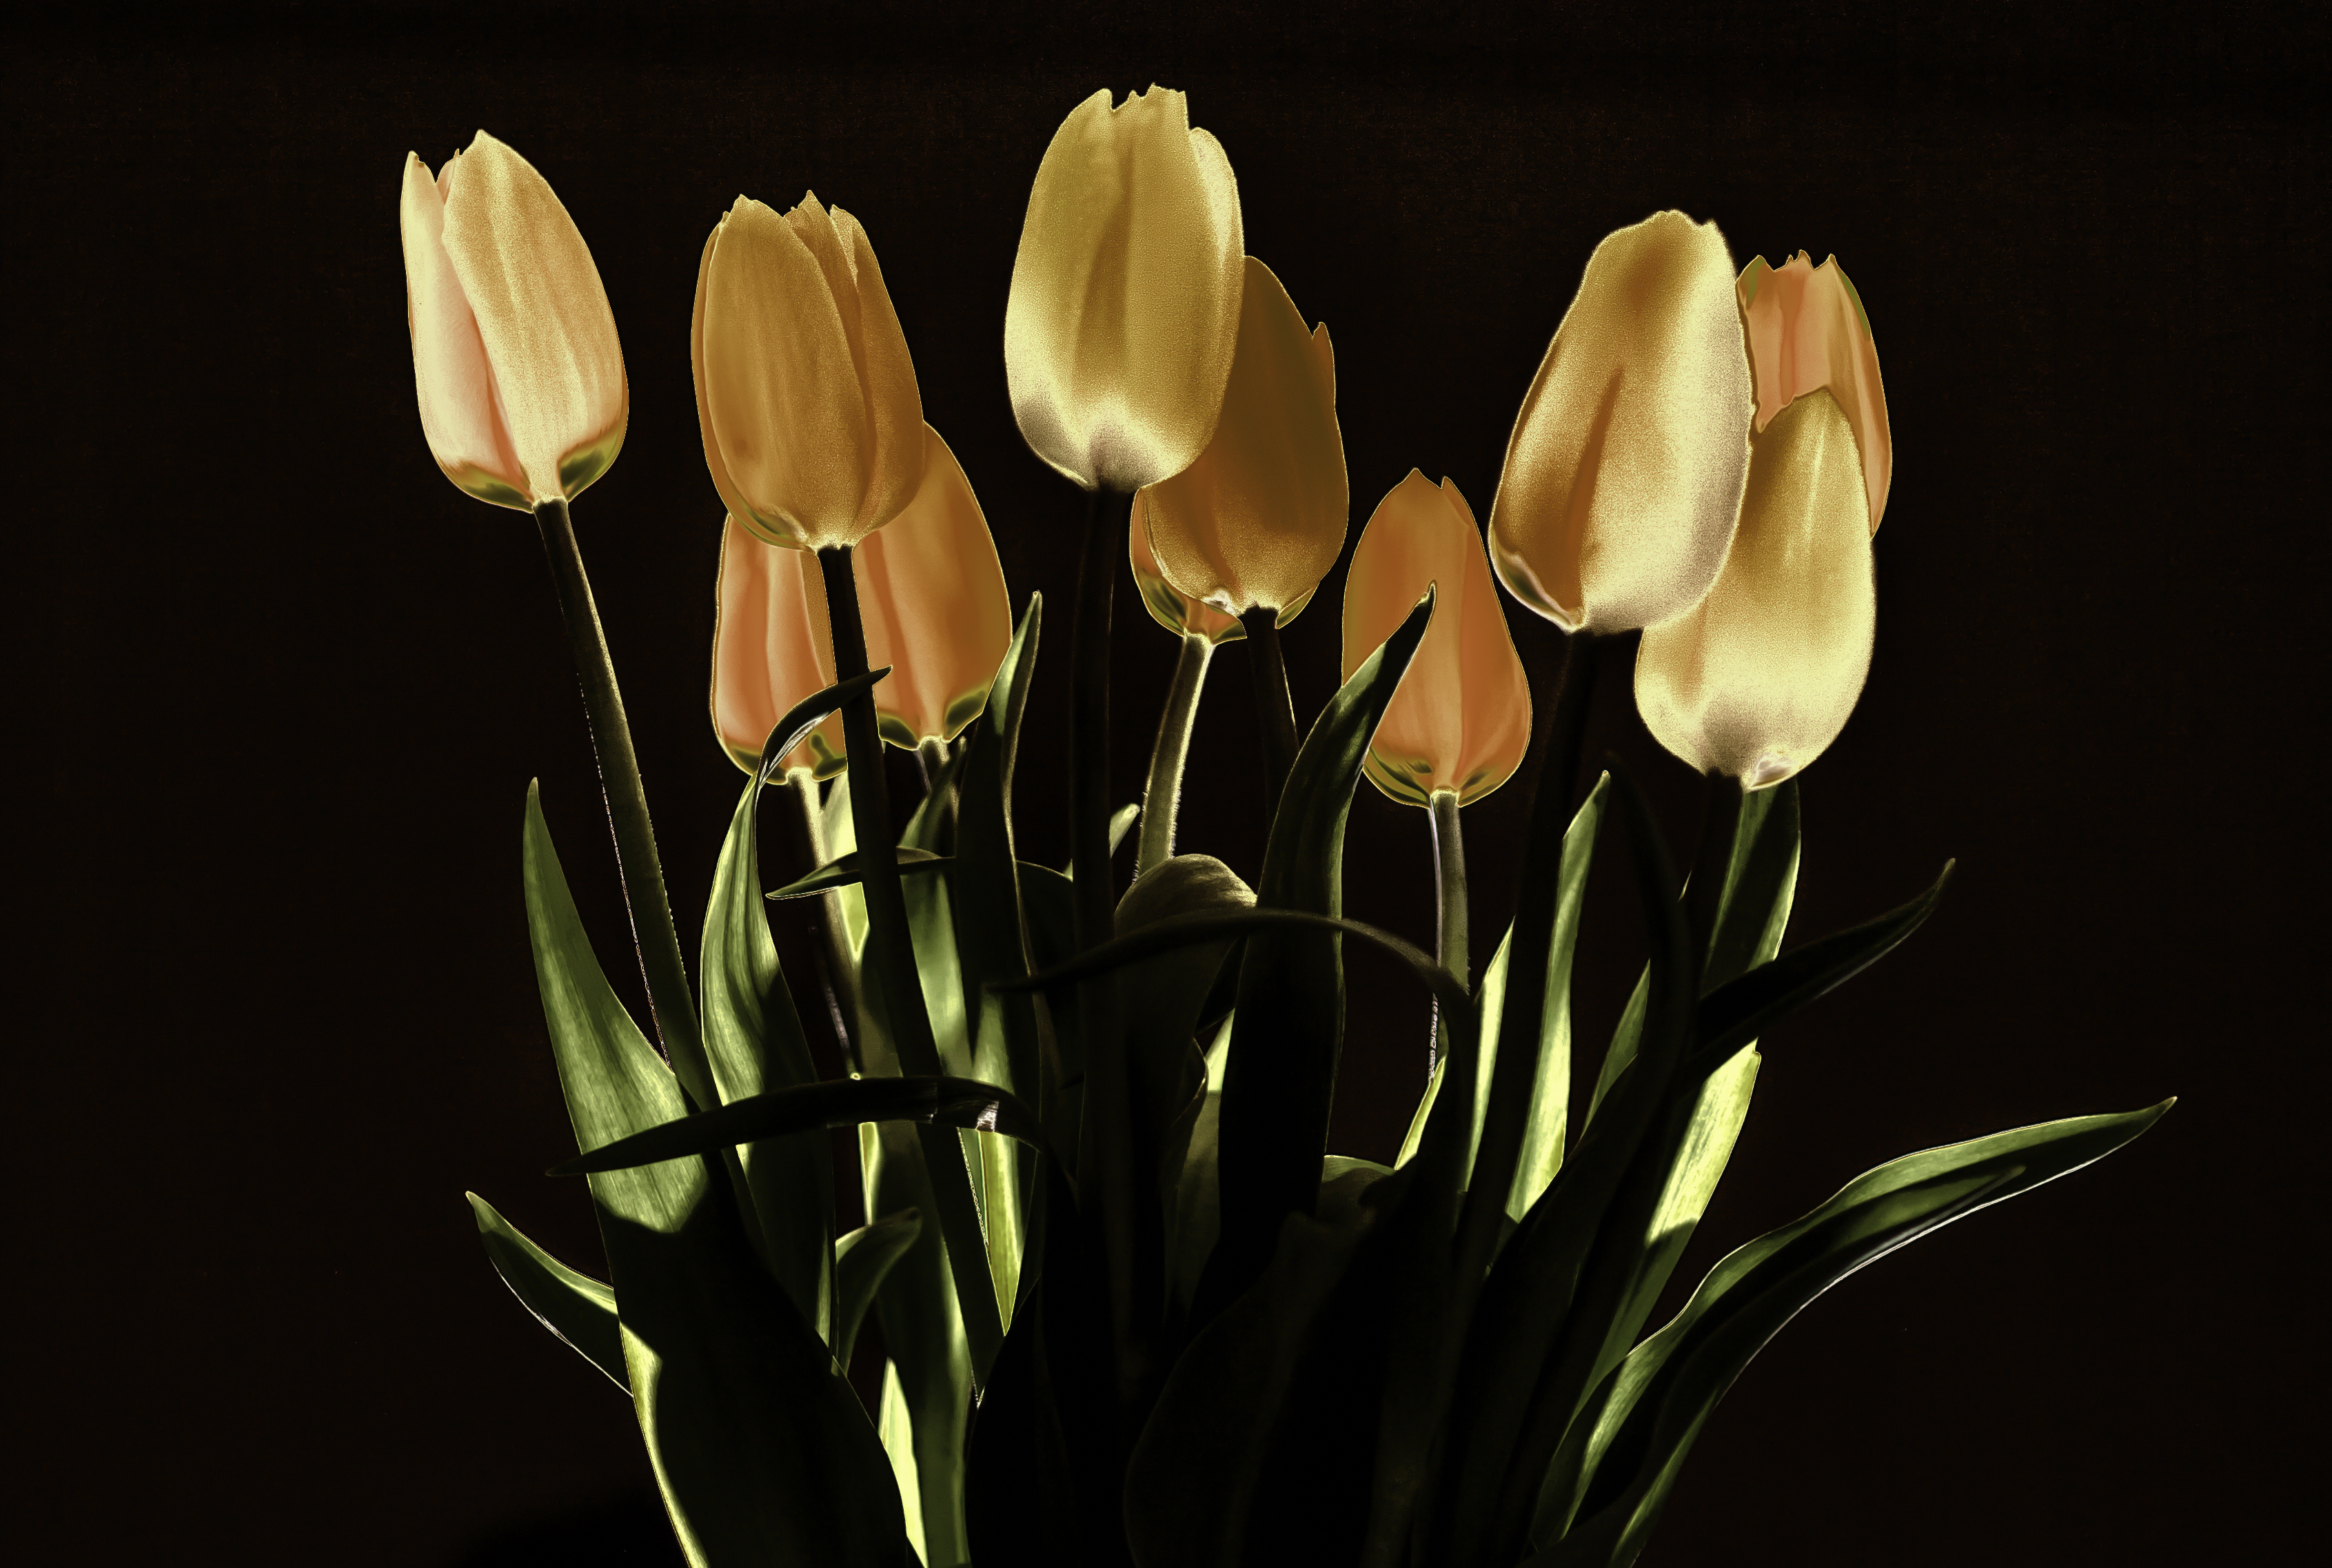 Tulips at night light (8147134594)